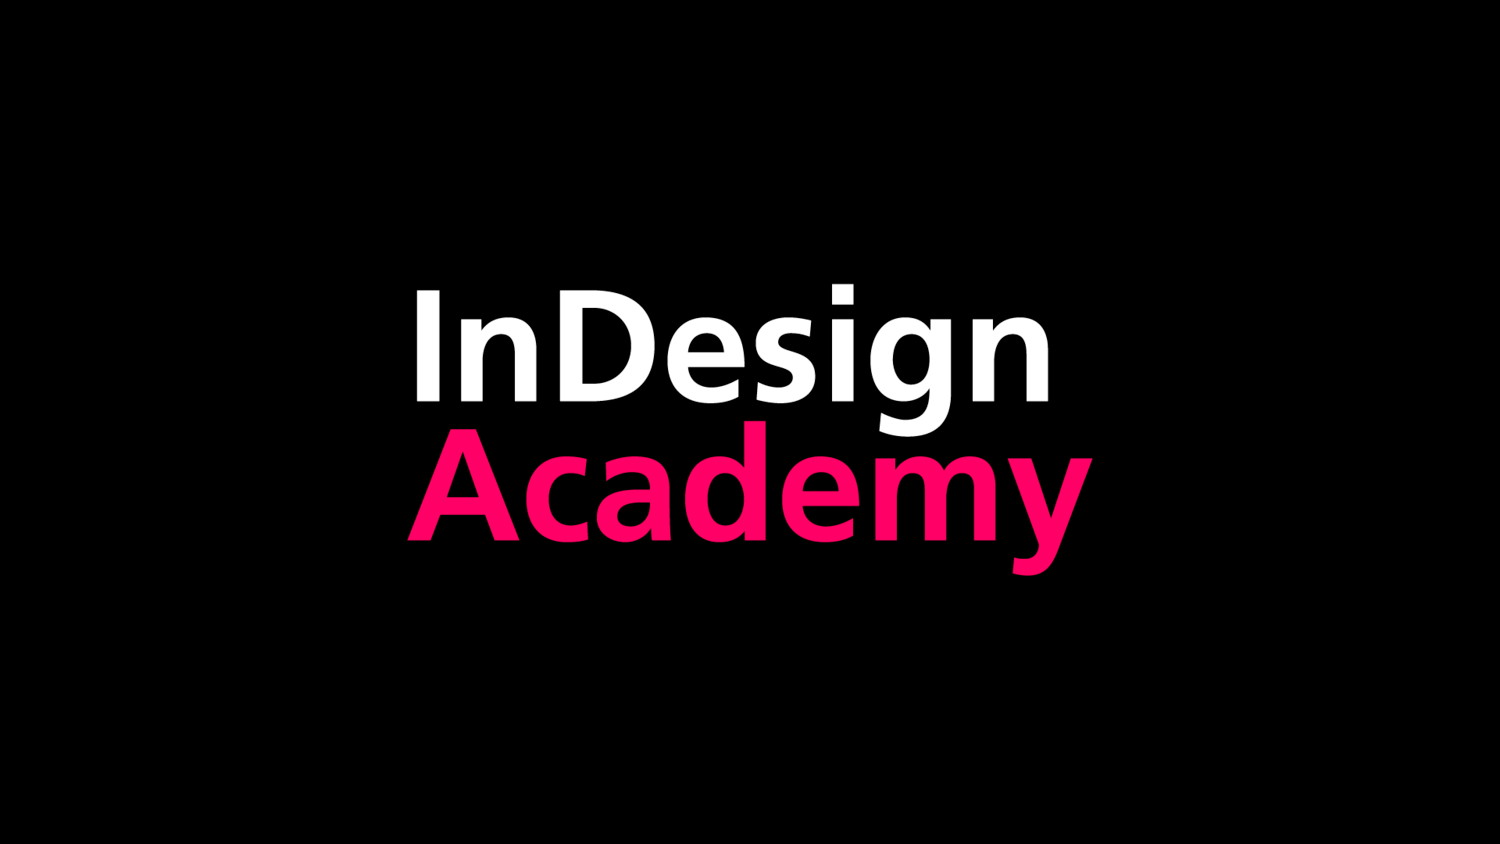 InDesign Academy